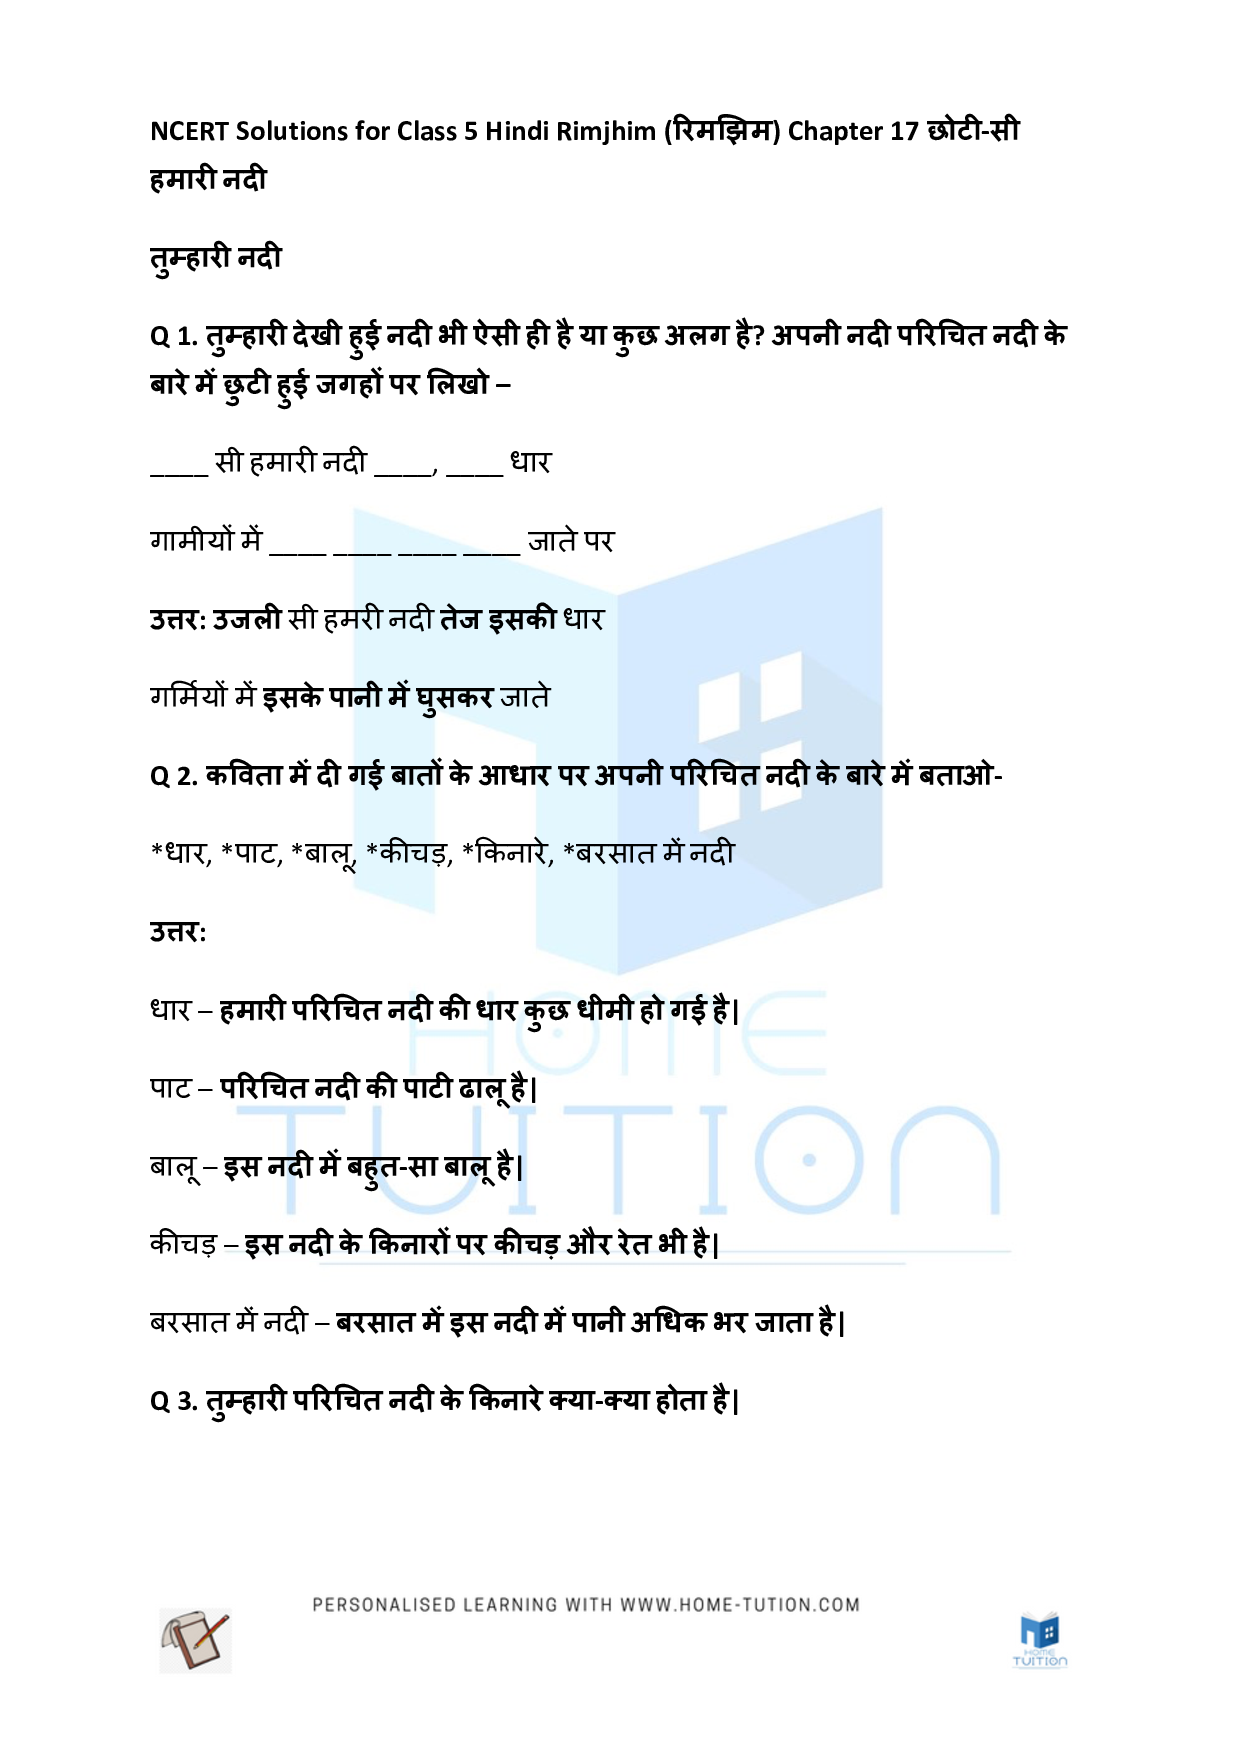 NCERT Solutions for Class 5 Hindi Rimjhim Chapter 17 छोटी-सी हमारी नदी